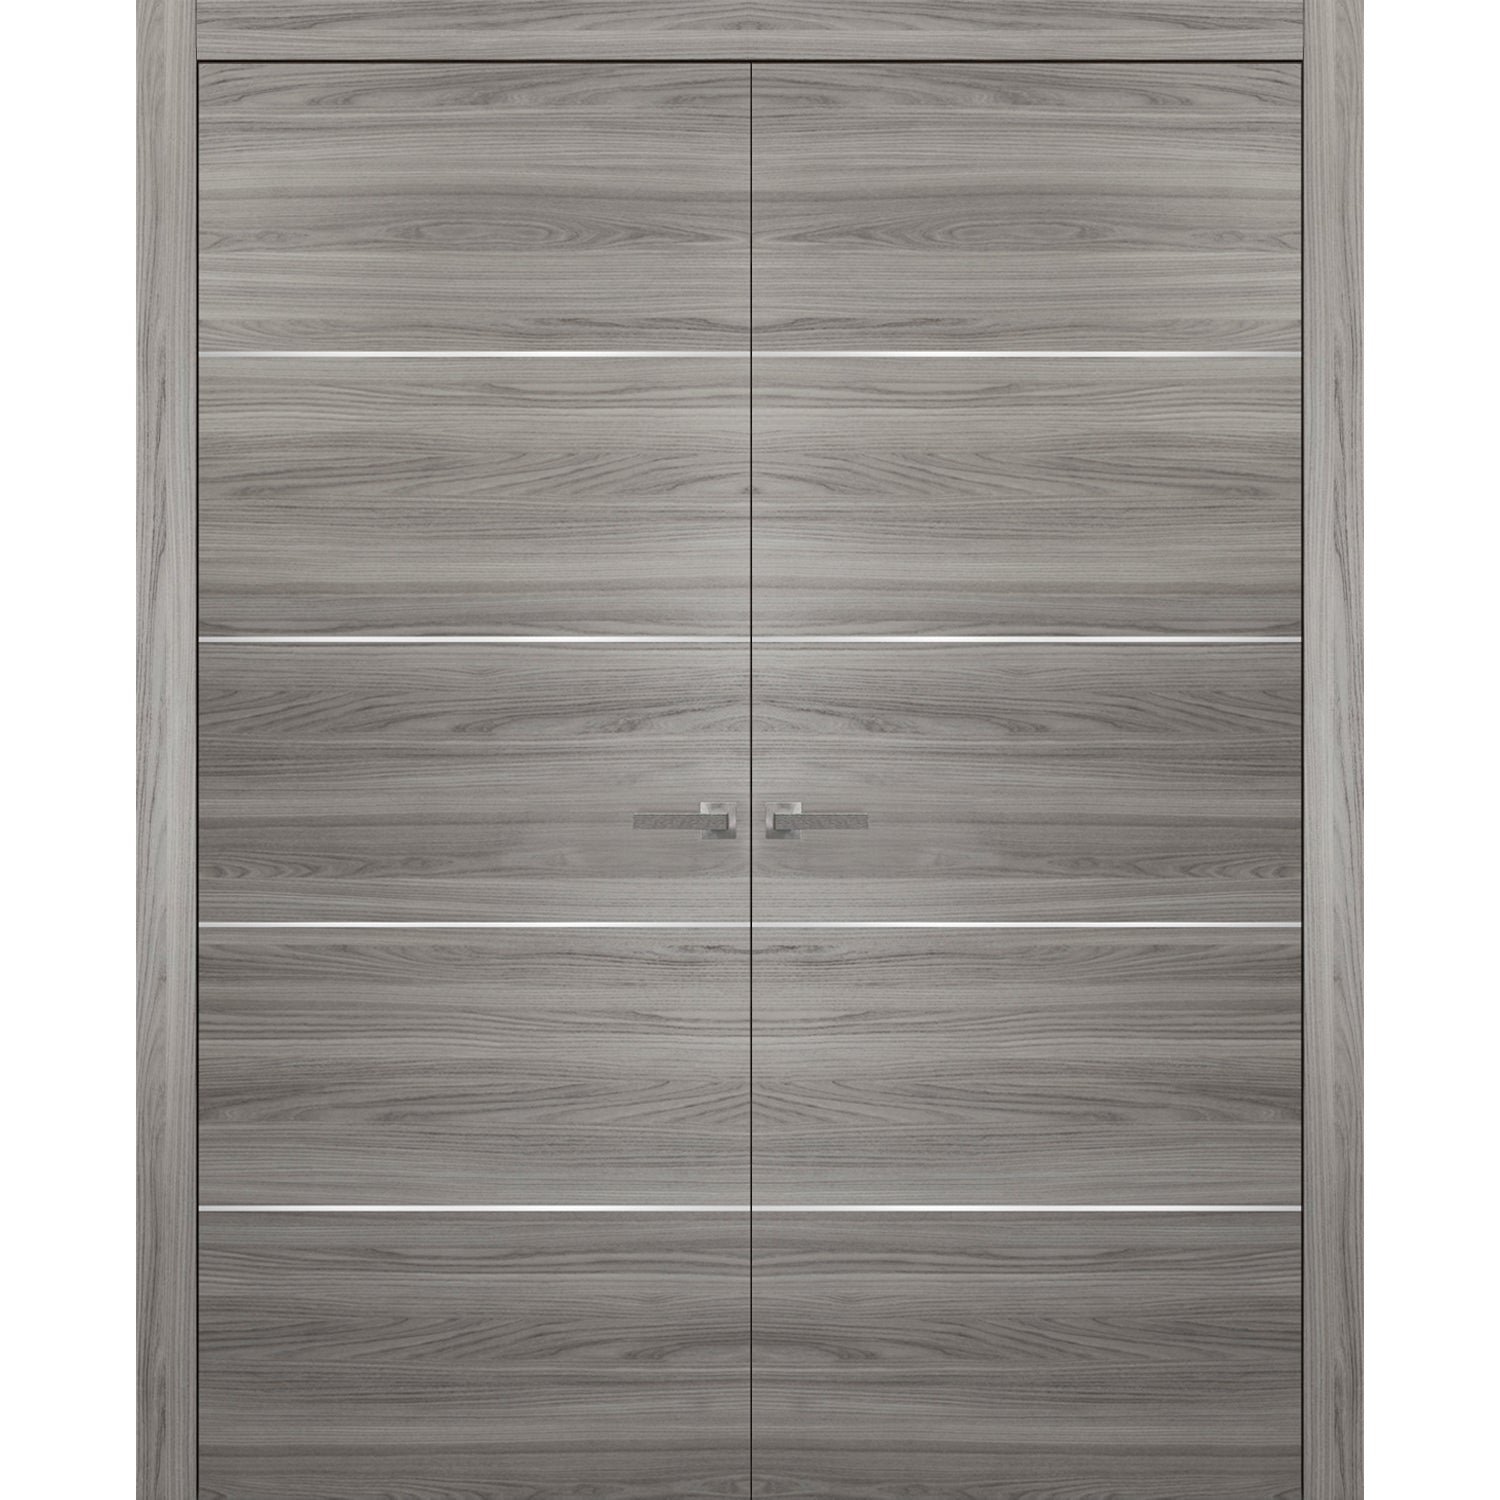 SARTODOORS Grey French Doors 84 x 84 with | Planum 0020 Ginger Ash | Frame Lever Satin Nickel Hardware | Wood Pre-hung Door